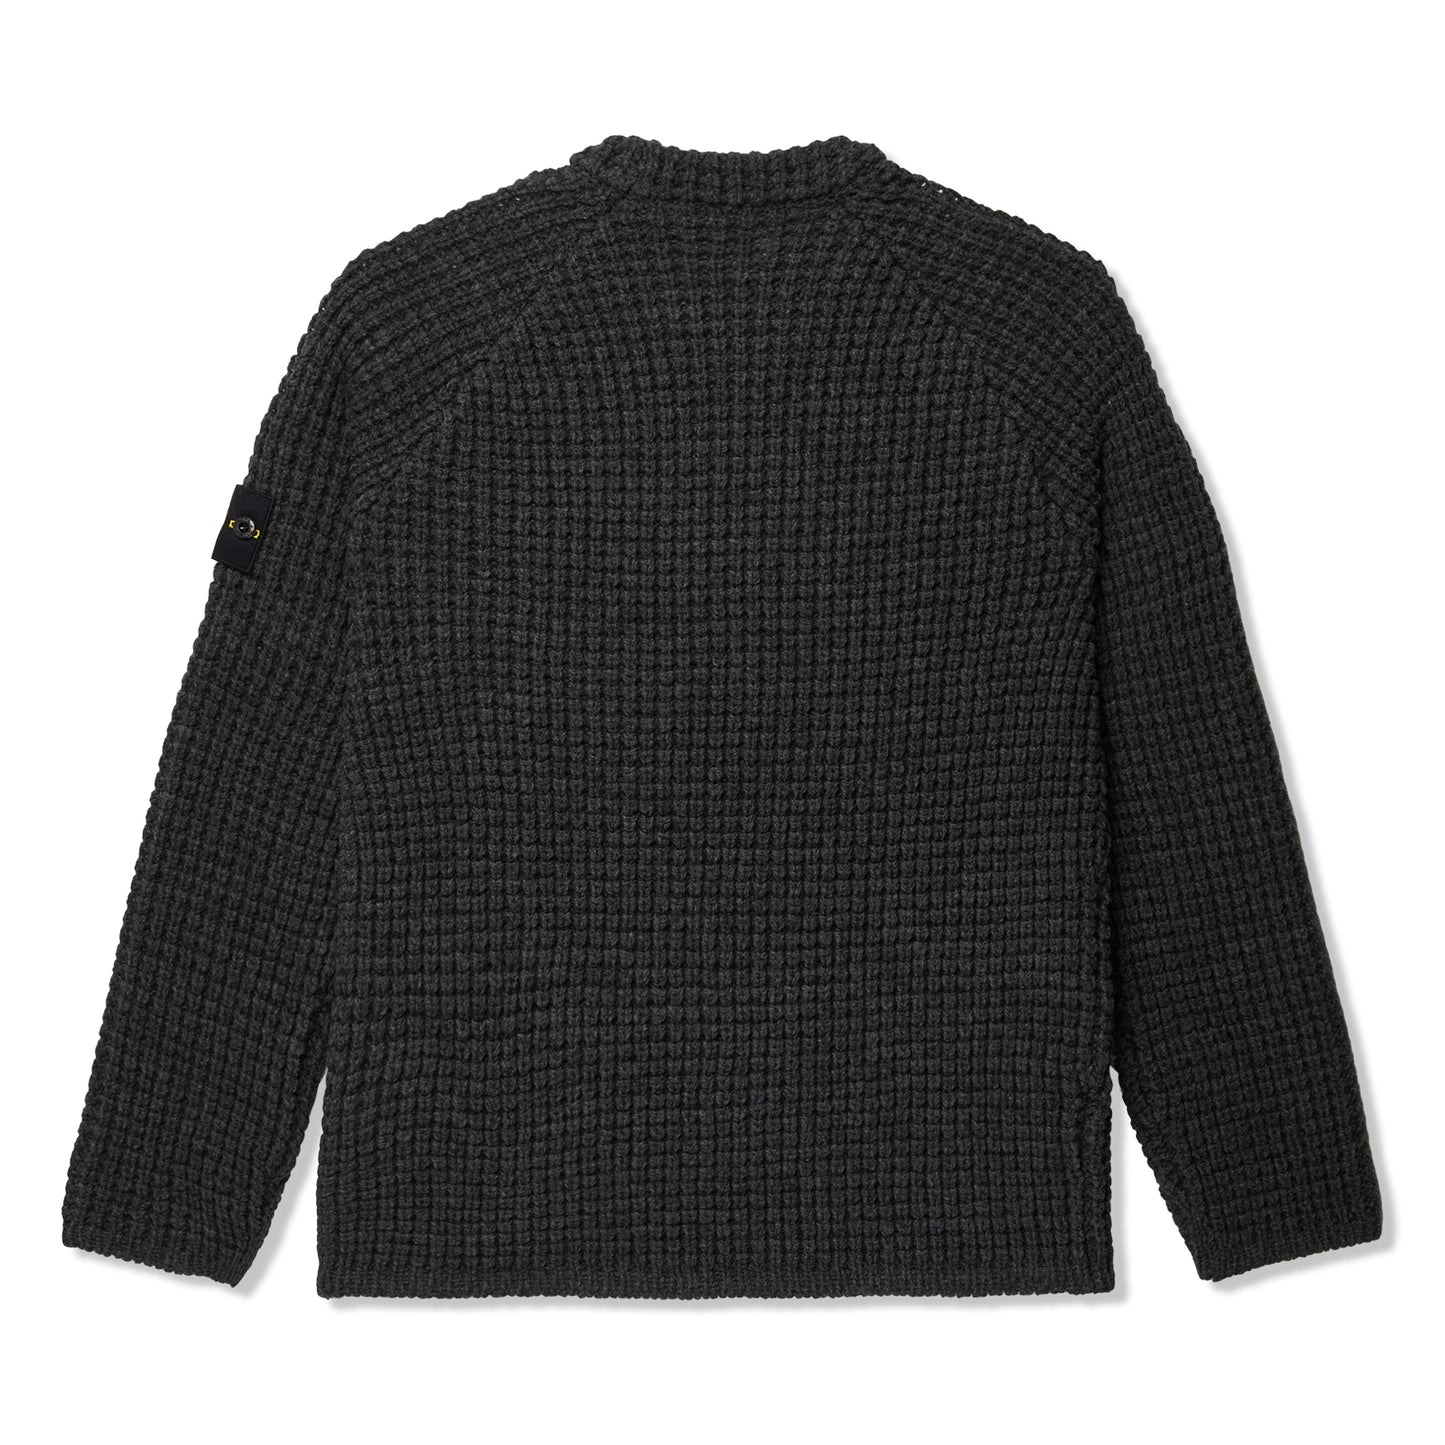 Stone Island Sweater (Black)